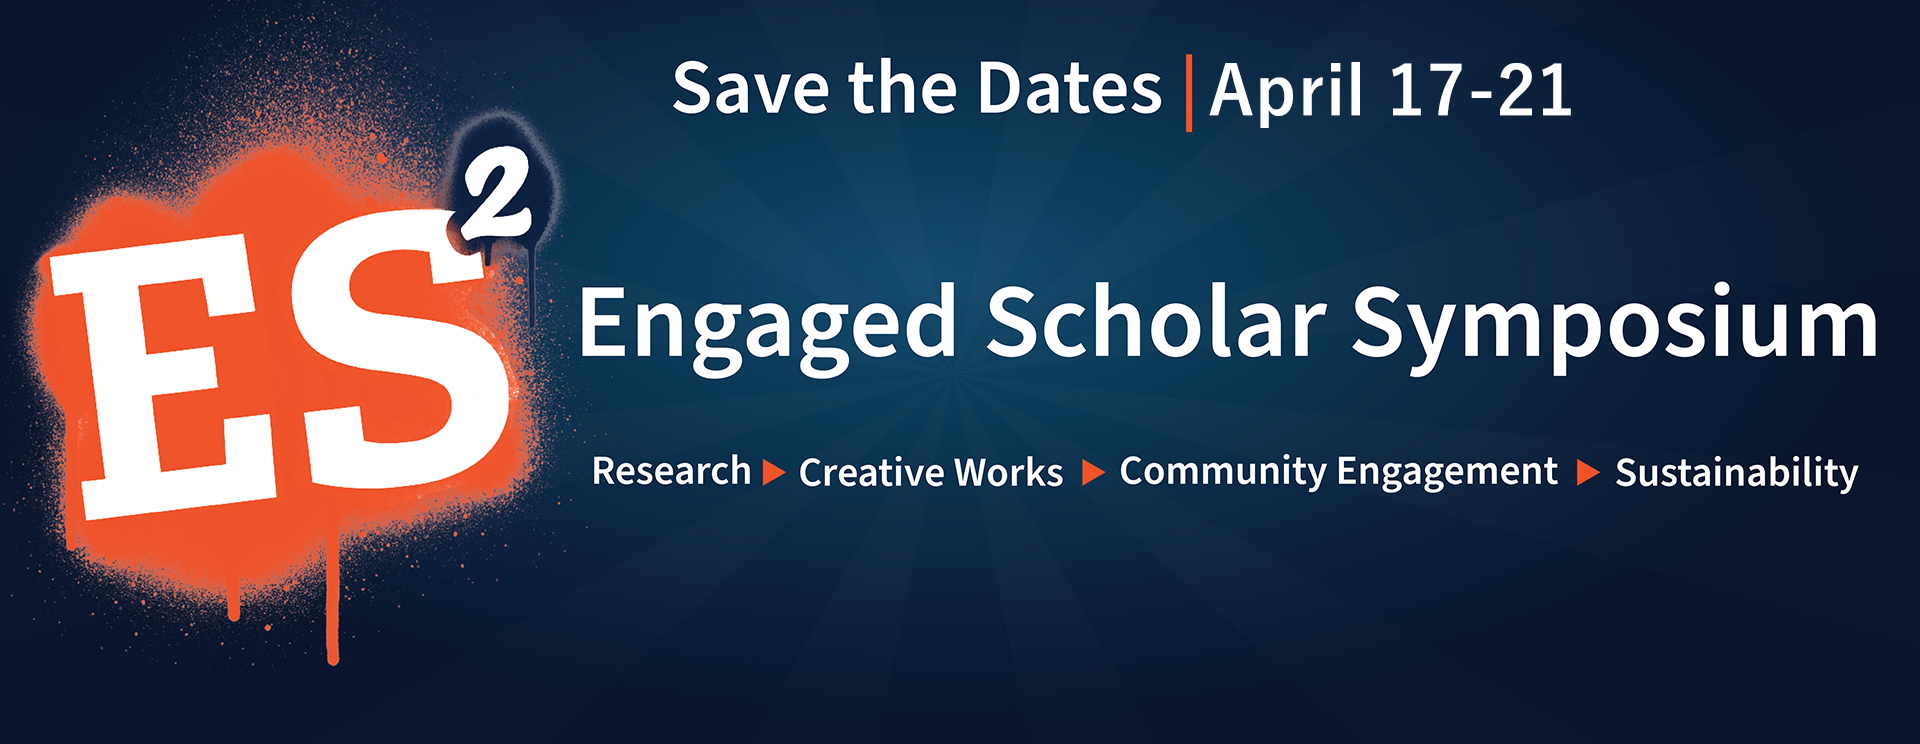 Engaged Scholar Symposium